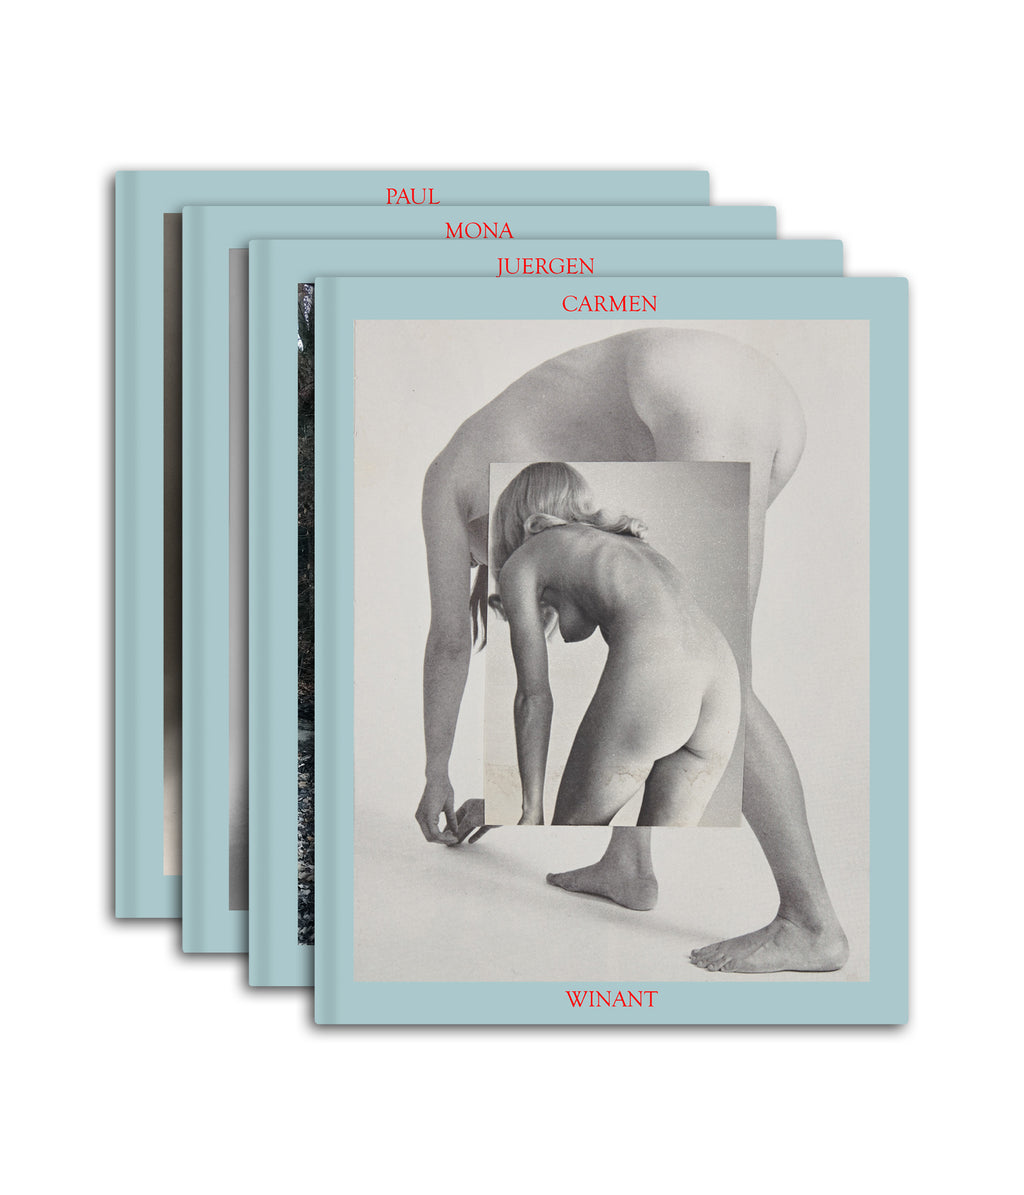 Annual Series No. 7 — Four Book Set